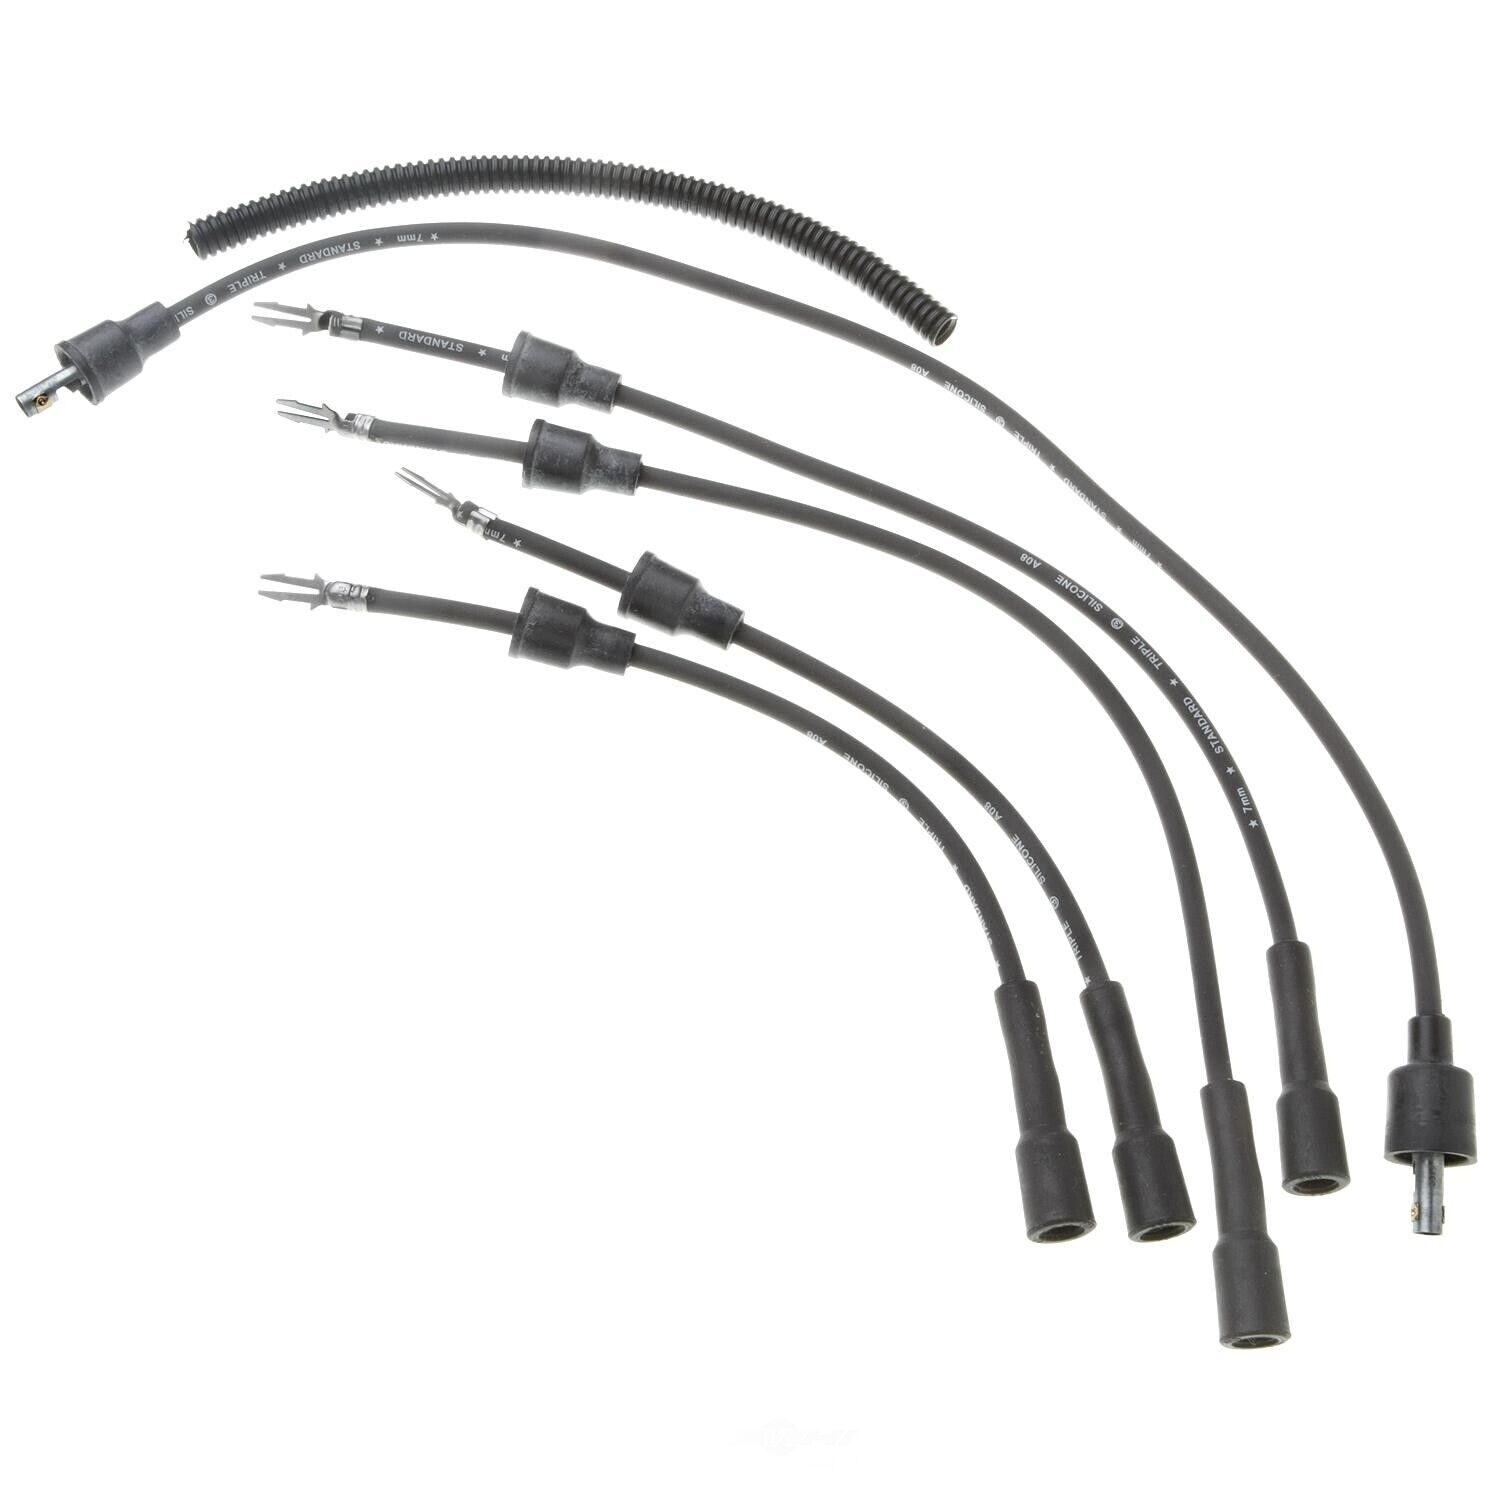 New Standard OE Plus Performance Spark Plug Wires Set 9453 Fits Dodge Omni 1.7L